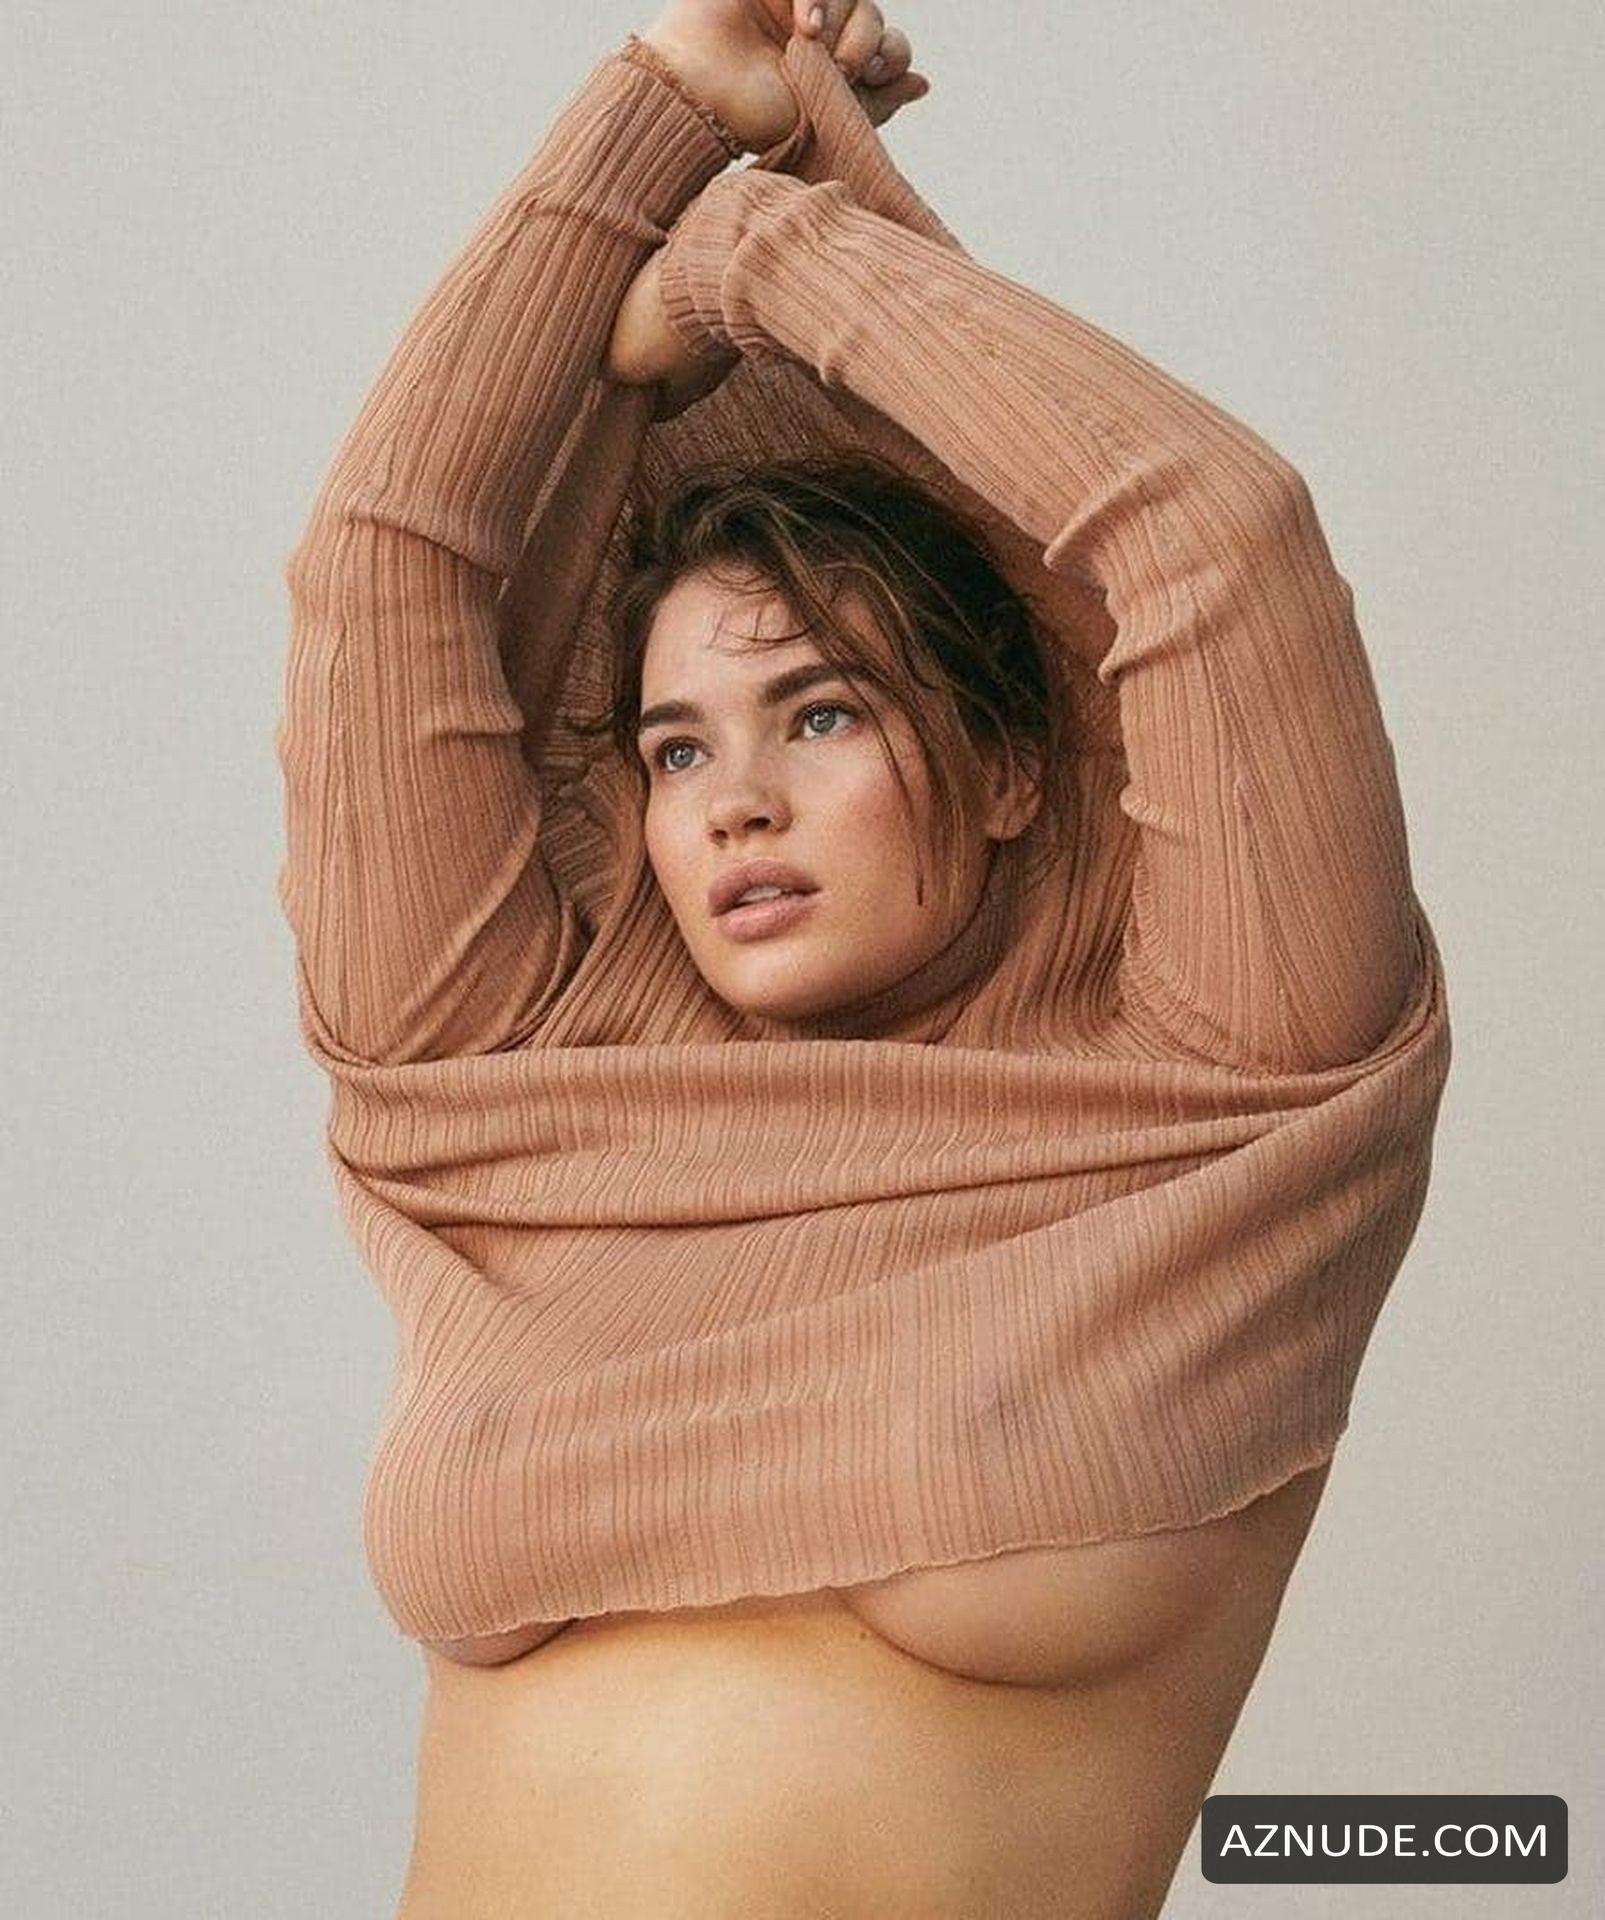 Tara lynn model nude